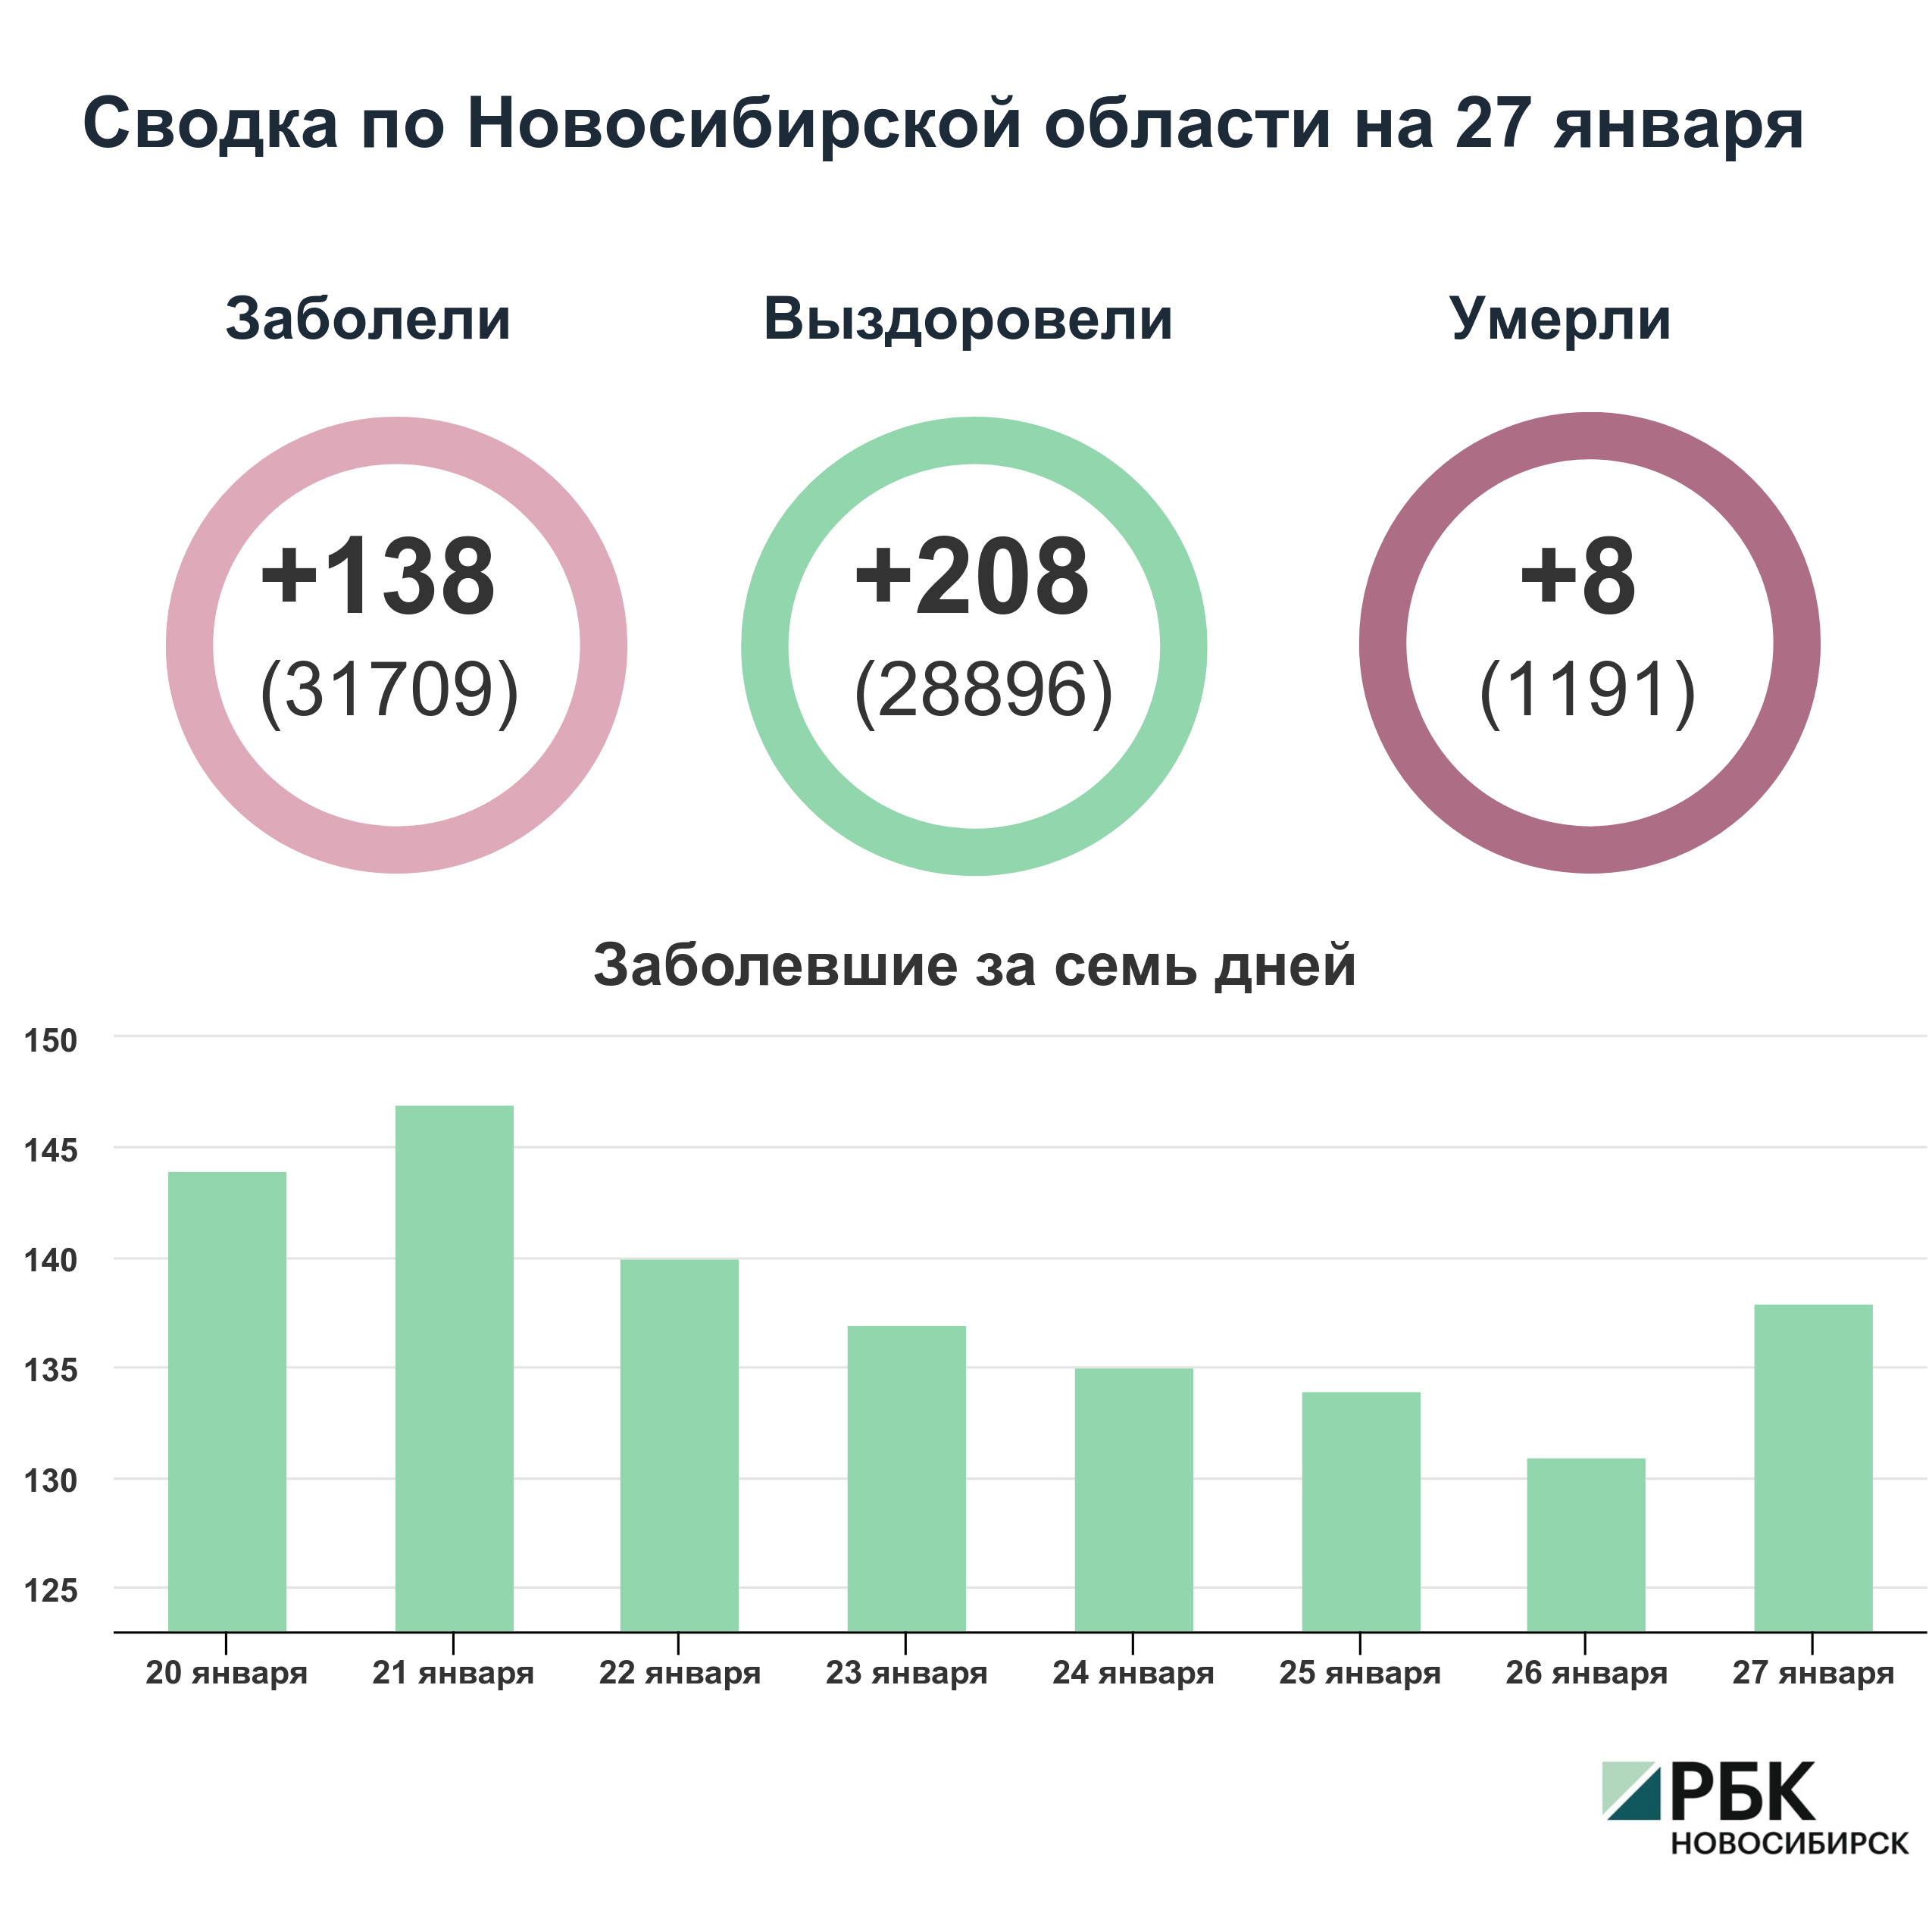 Коронавирус в Новосибирске: сводка на 27 января